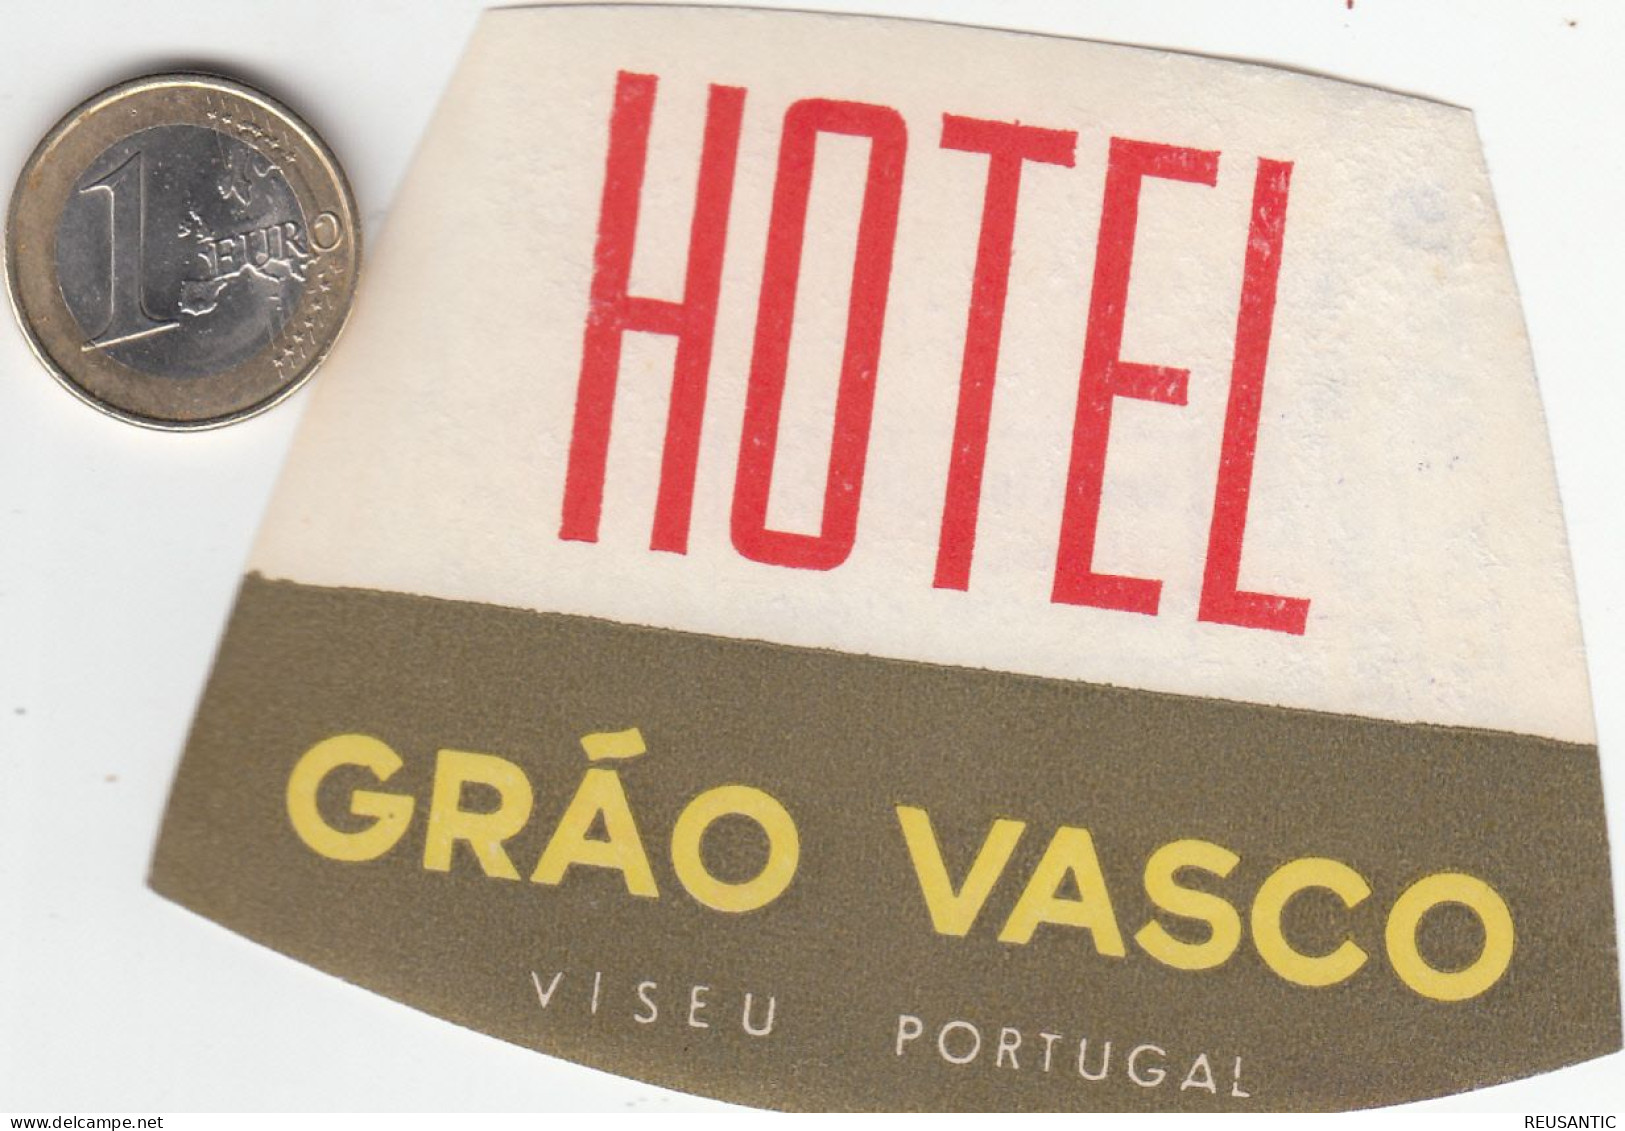 ETIQUETA - STICKER - LUGGAGE LABEL PORTUGAL  HOTEL GRAO VASCO EN VISEU - Hotel Labels